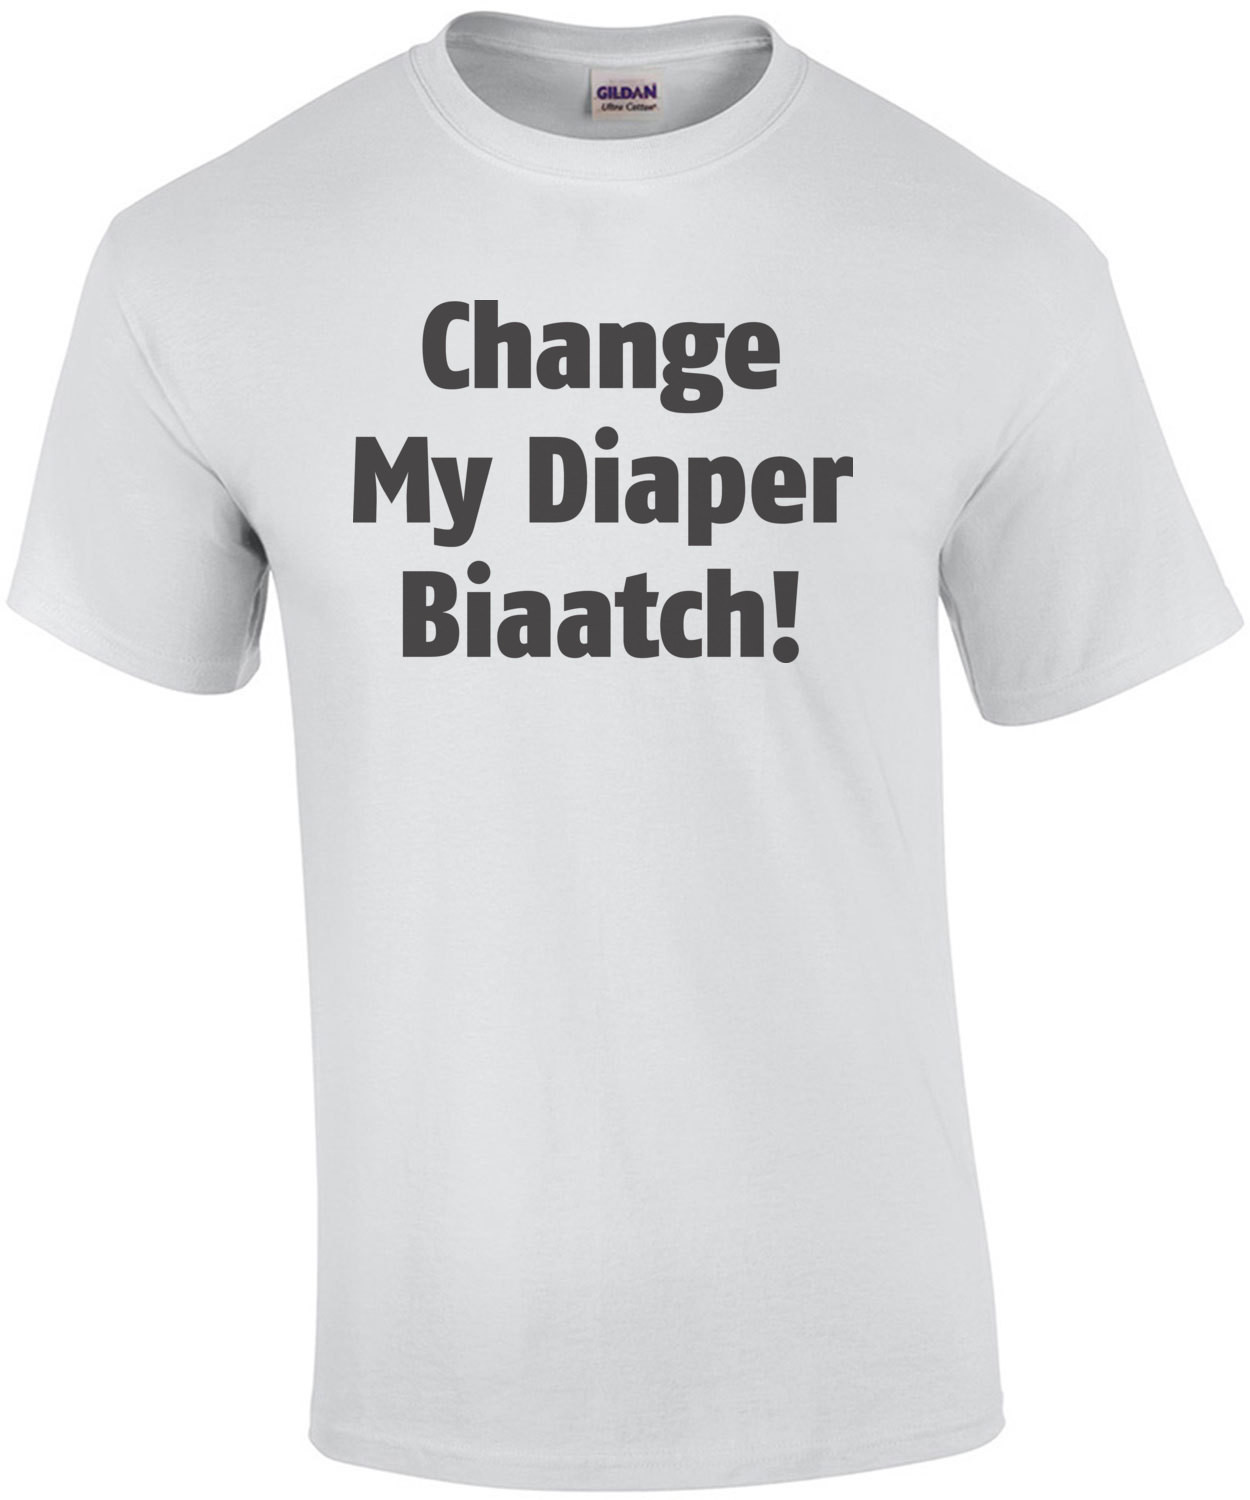 Change My Diaper Biaatch Baby Shirt